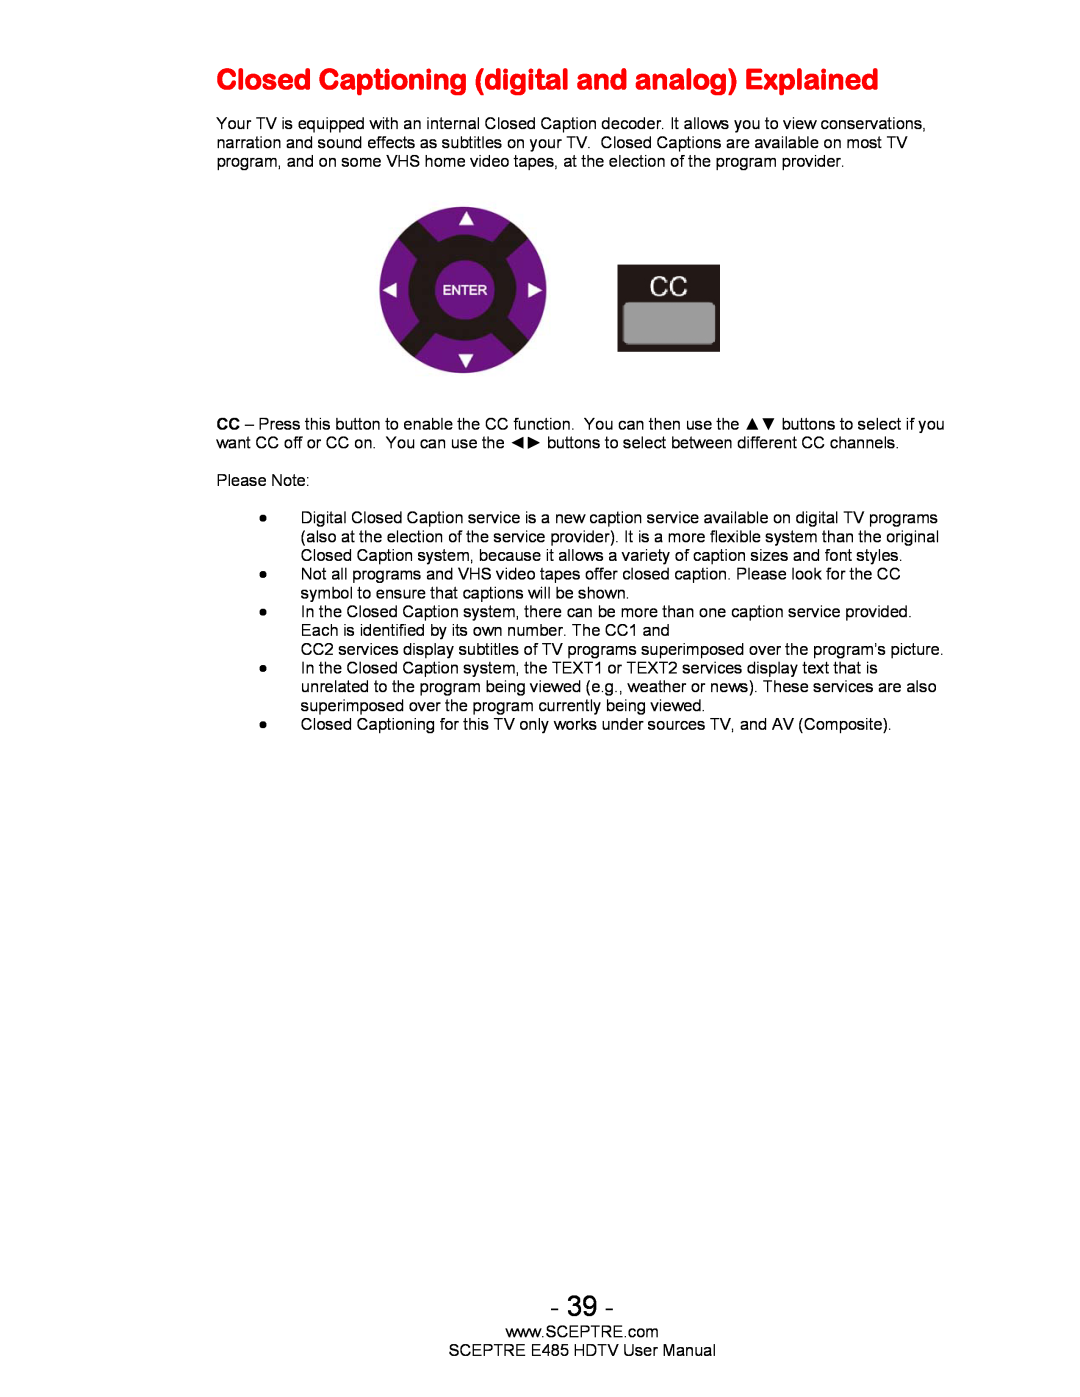 Sceptre Technologies E485 user manual Closed Captioning digital and analog Explained 